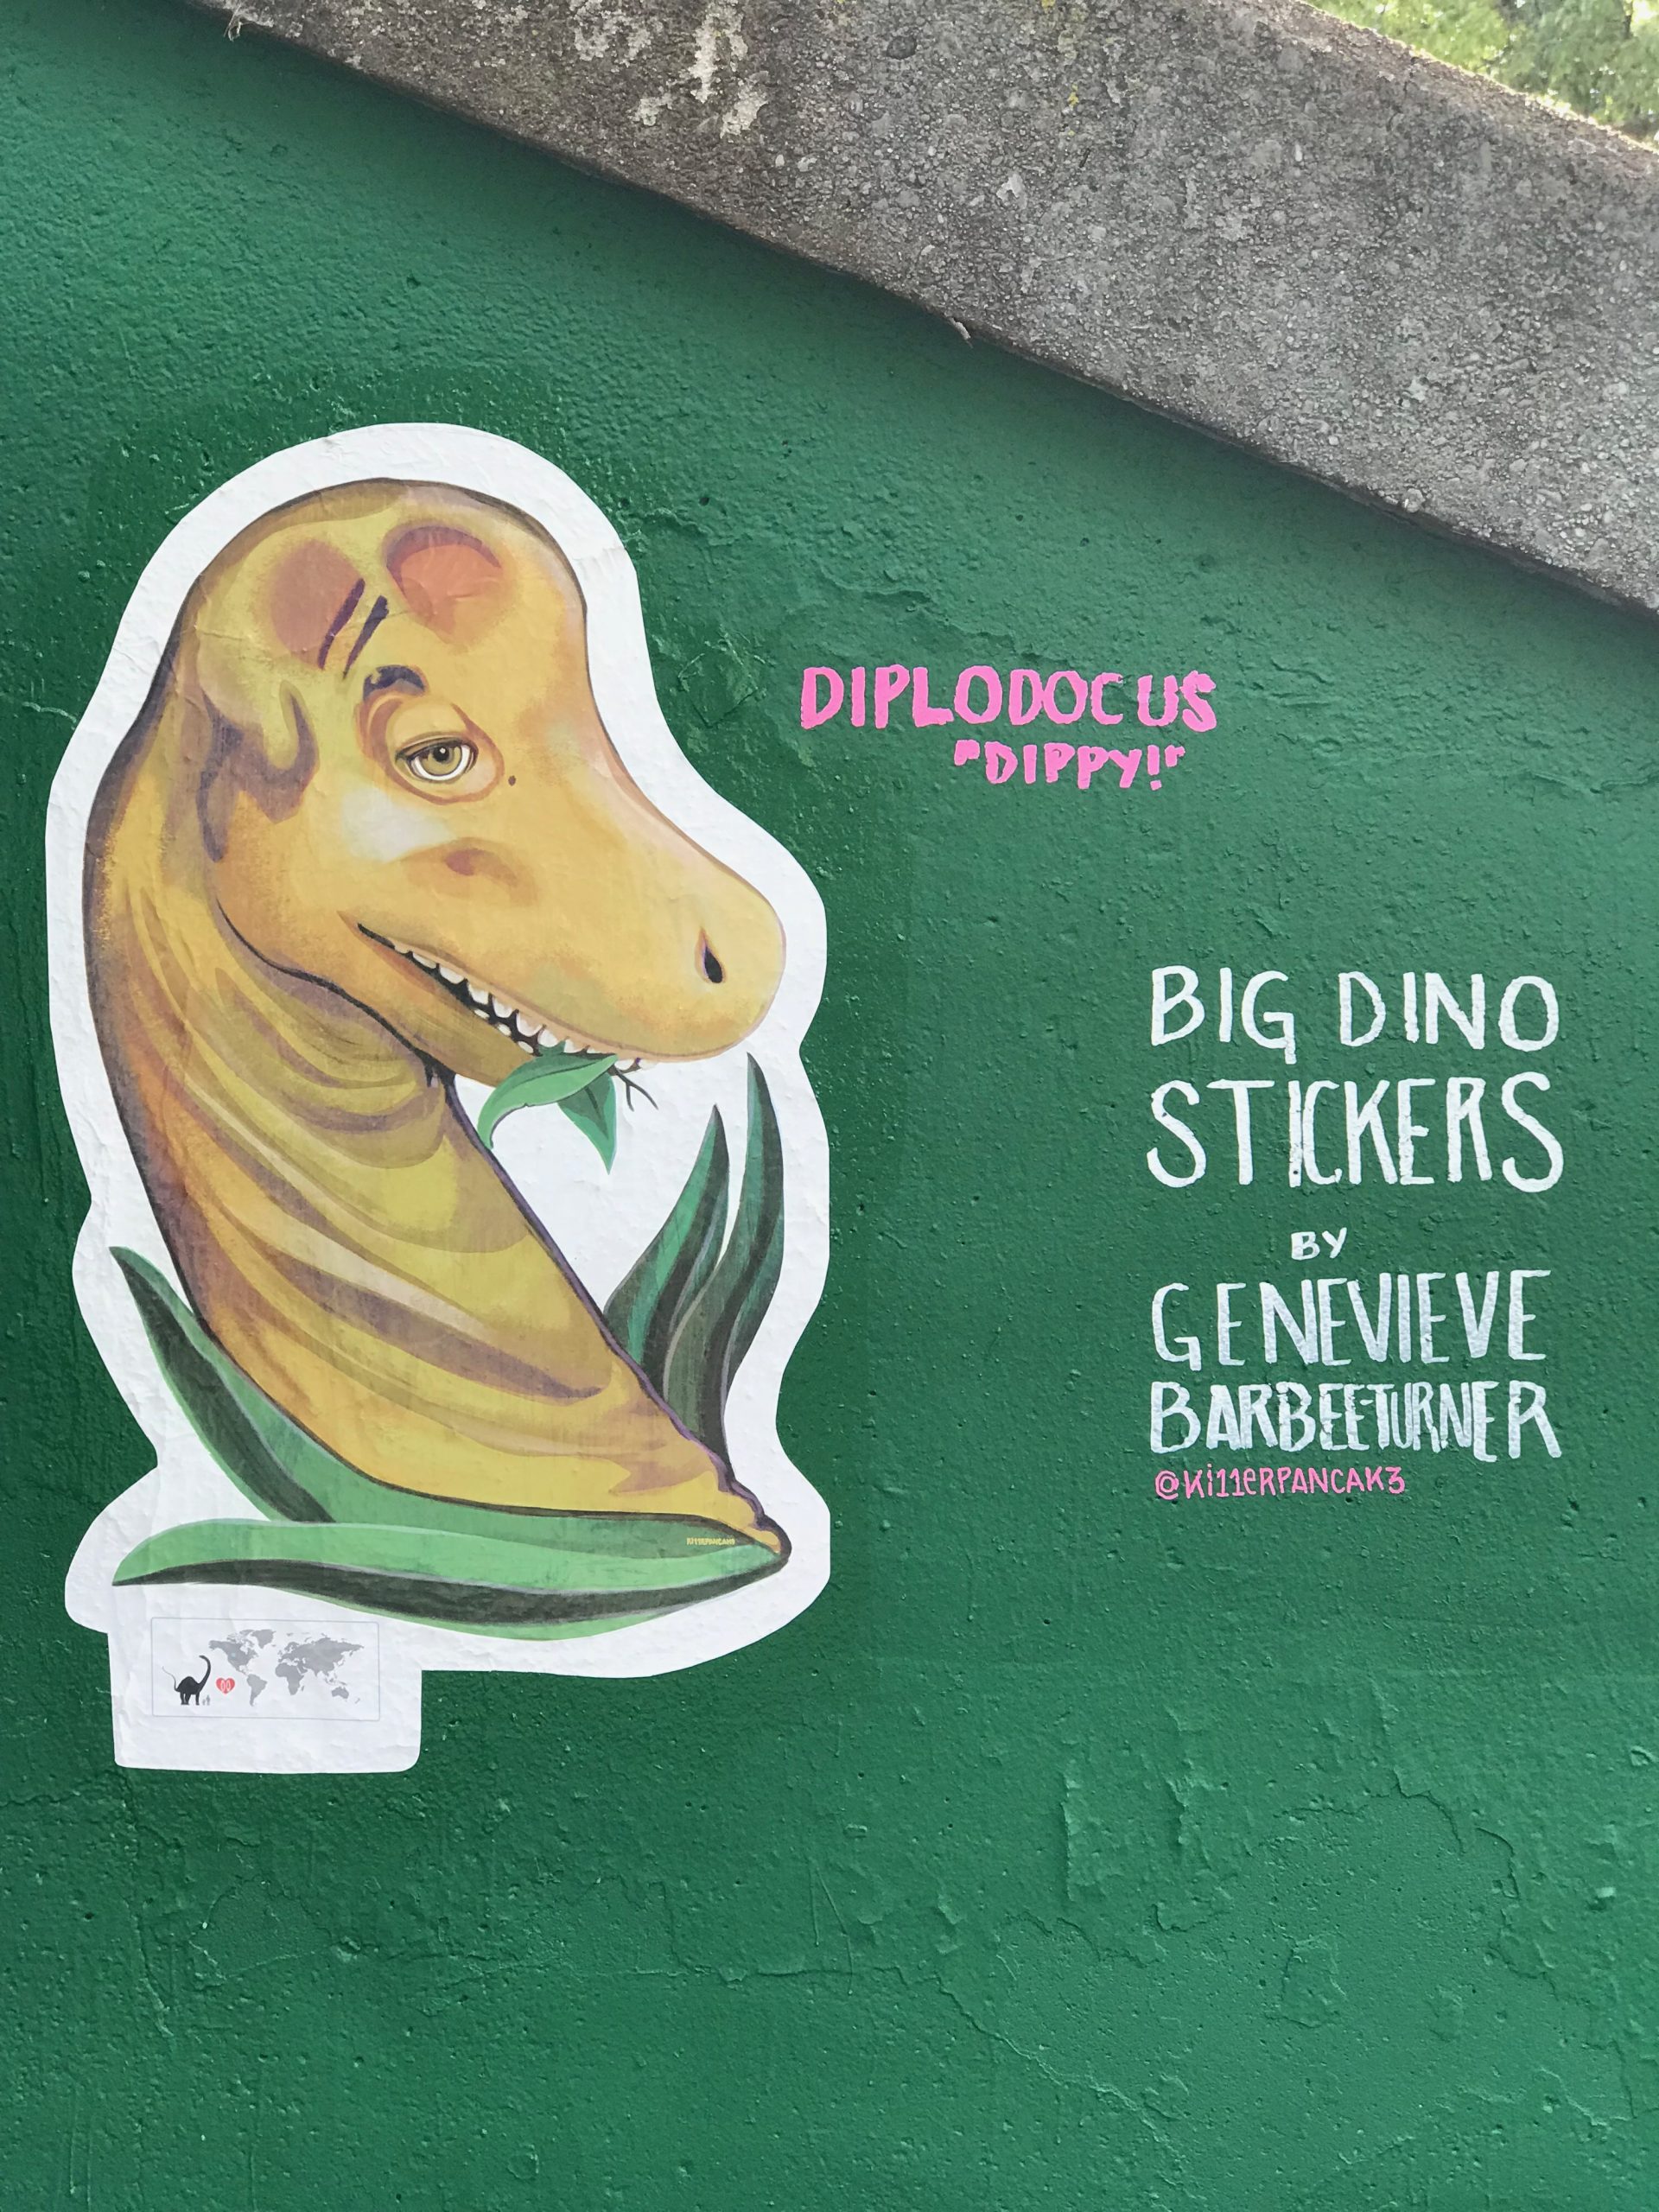 The Big Dino Sticker Pack